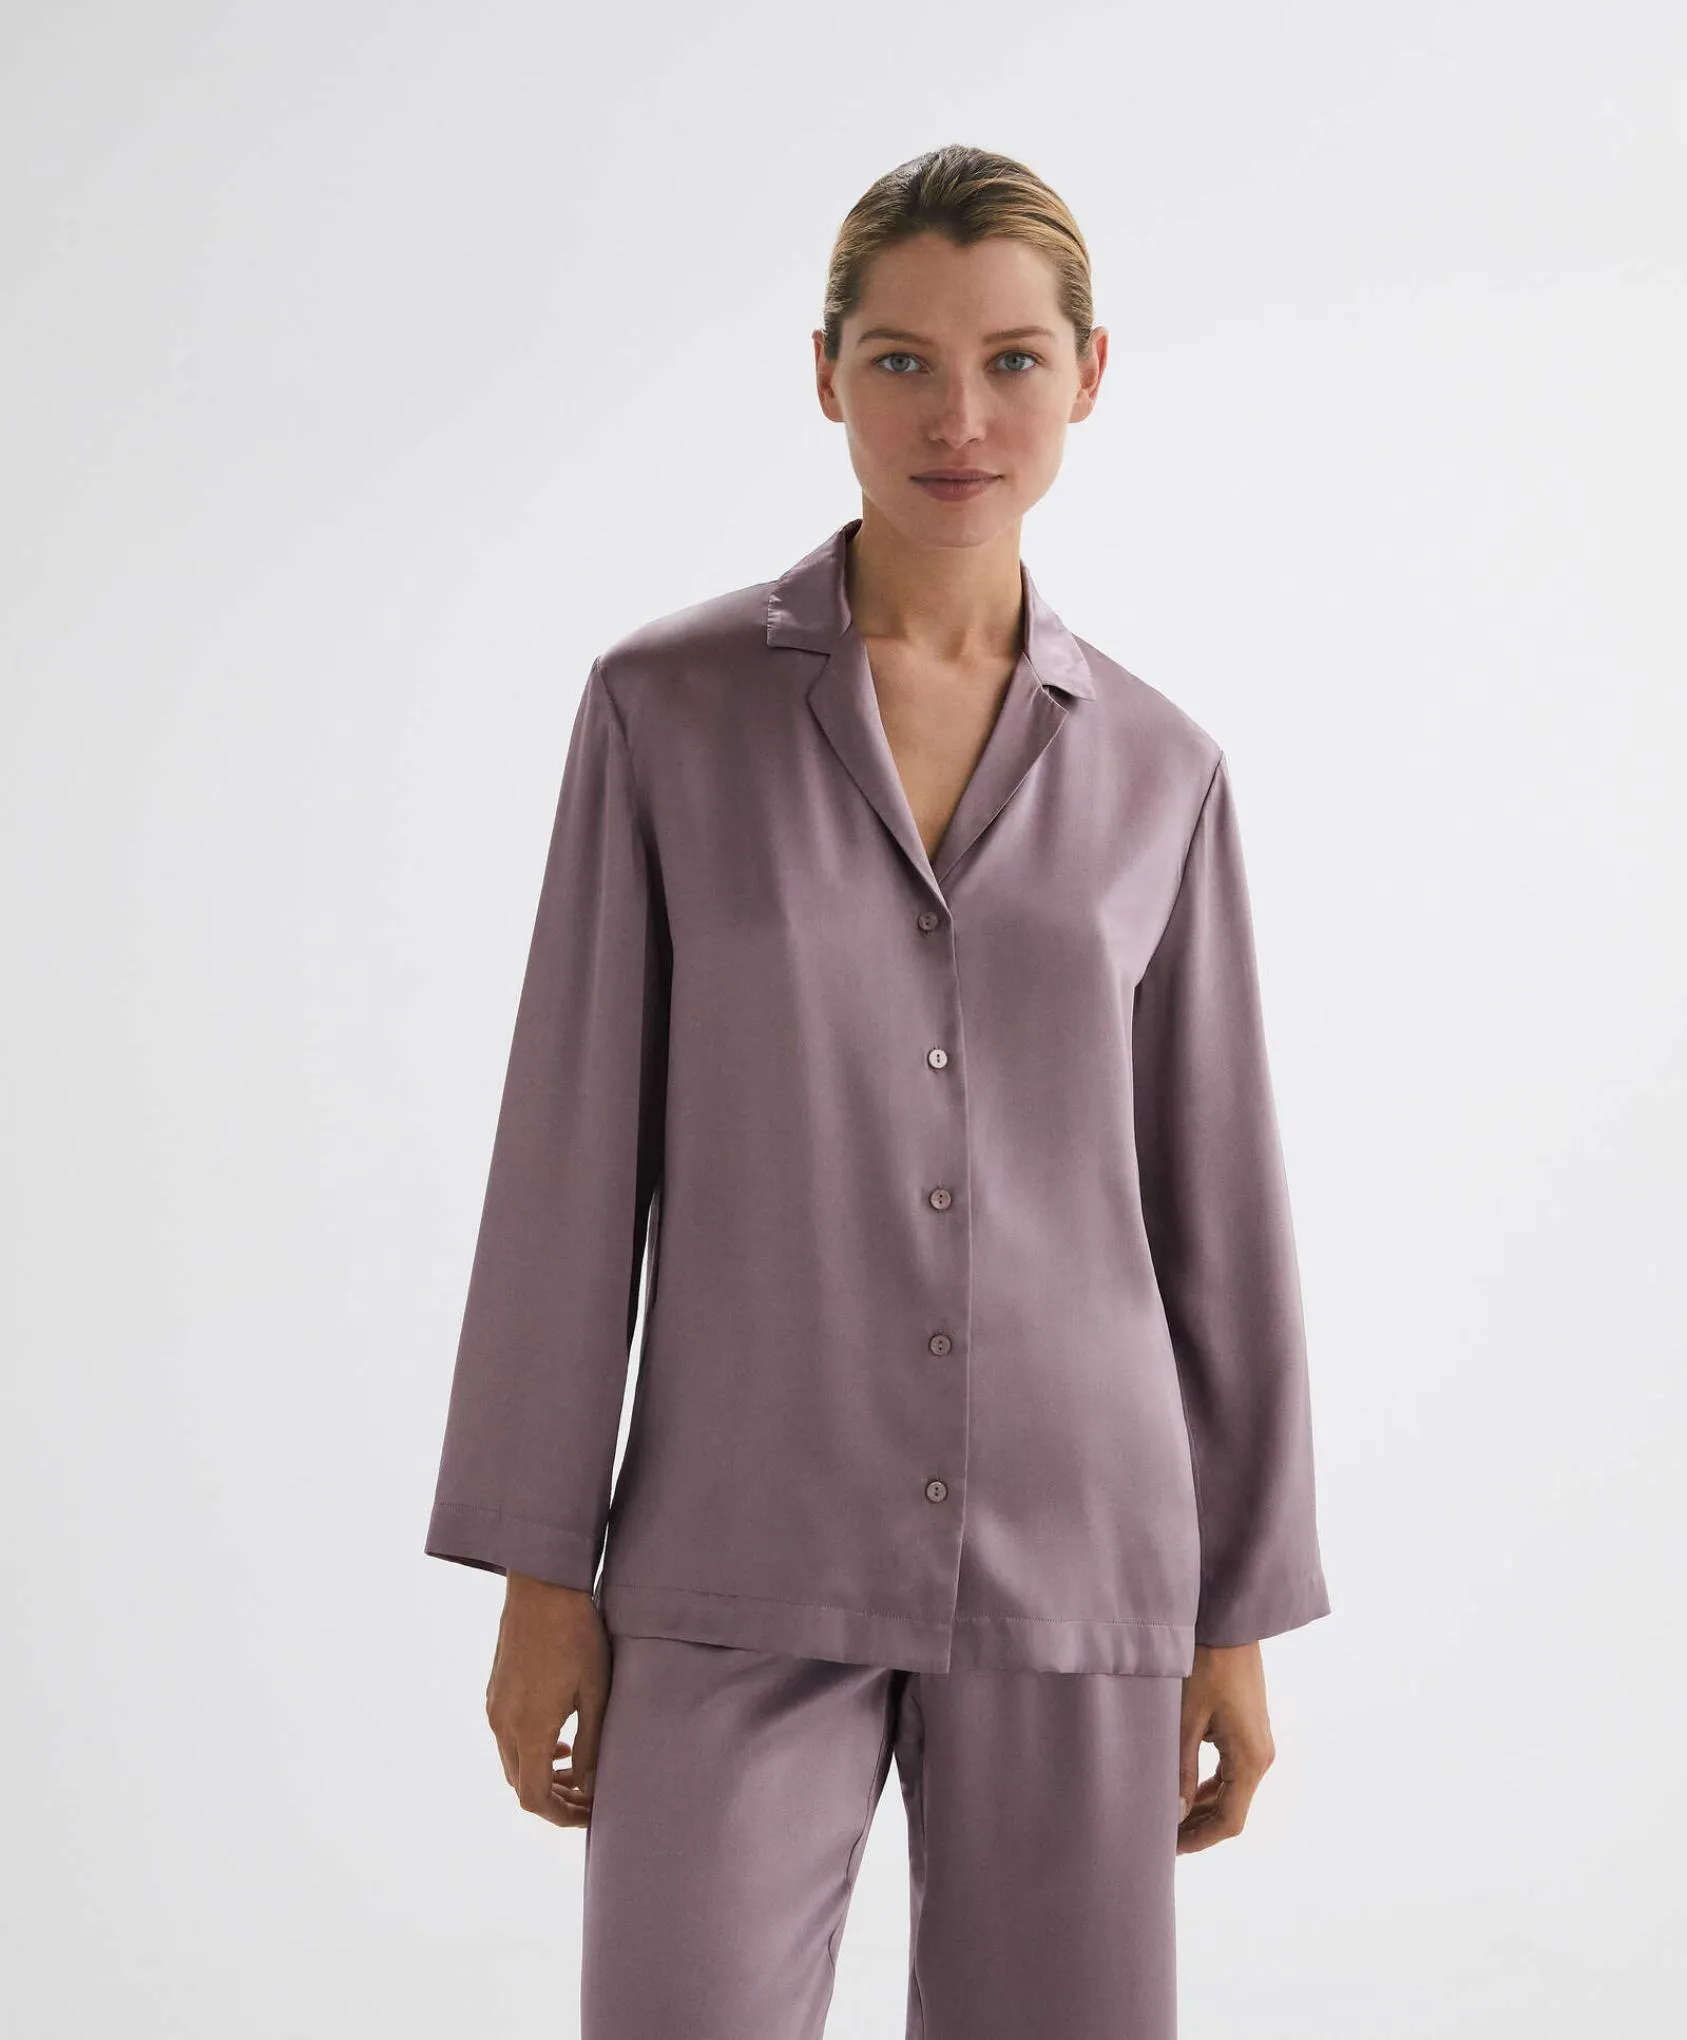 Catalogue Pyjamas et Homewear, page 00026